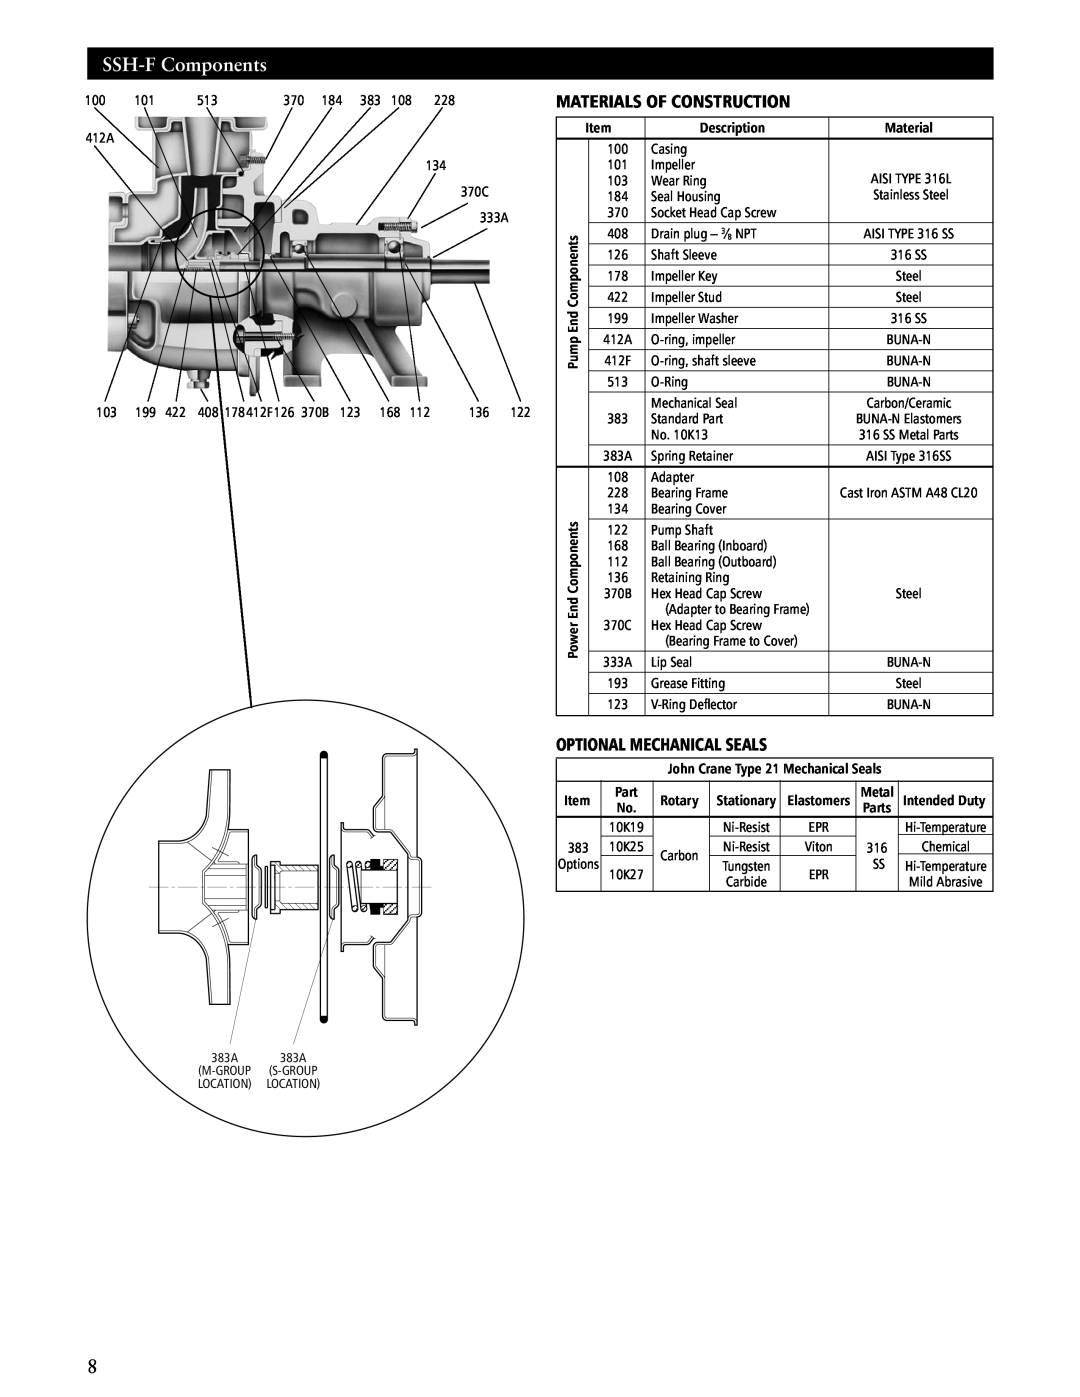 ITT SSH-C manual SSH-F Components, Materials of Construction, Optional Mechanical Seals, Description, Part, Rotary 